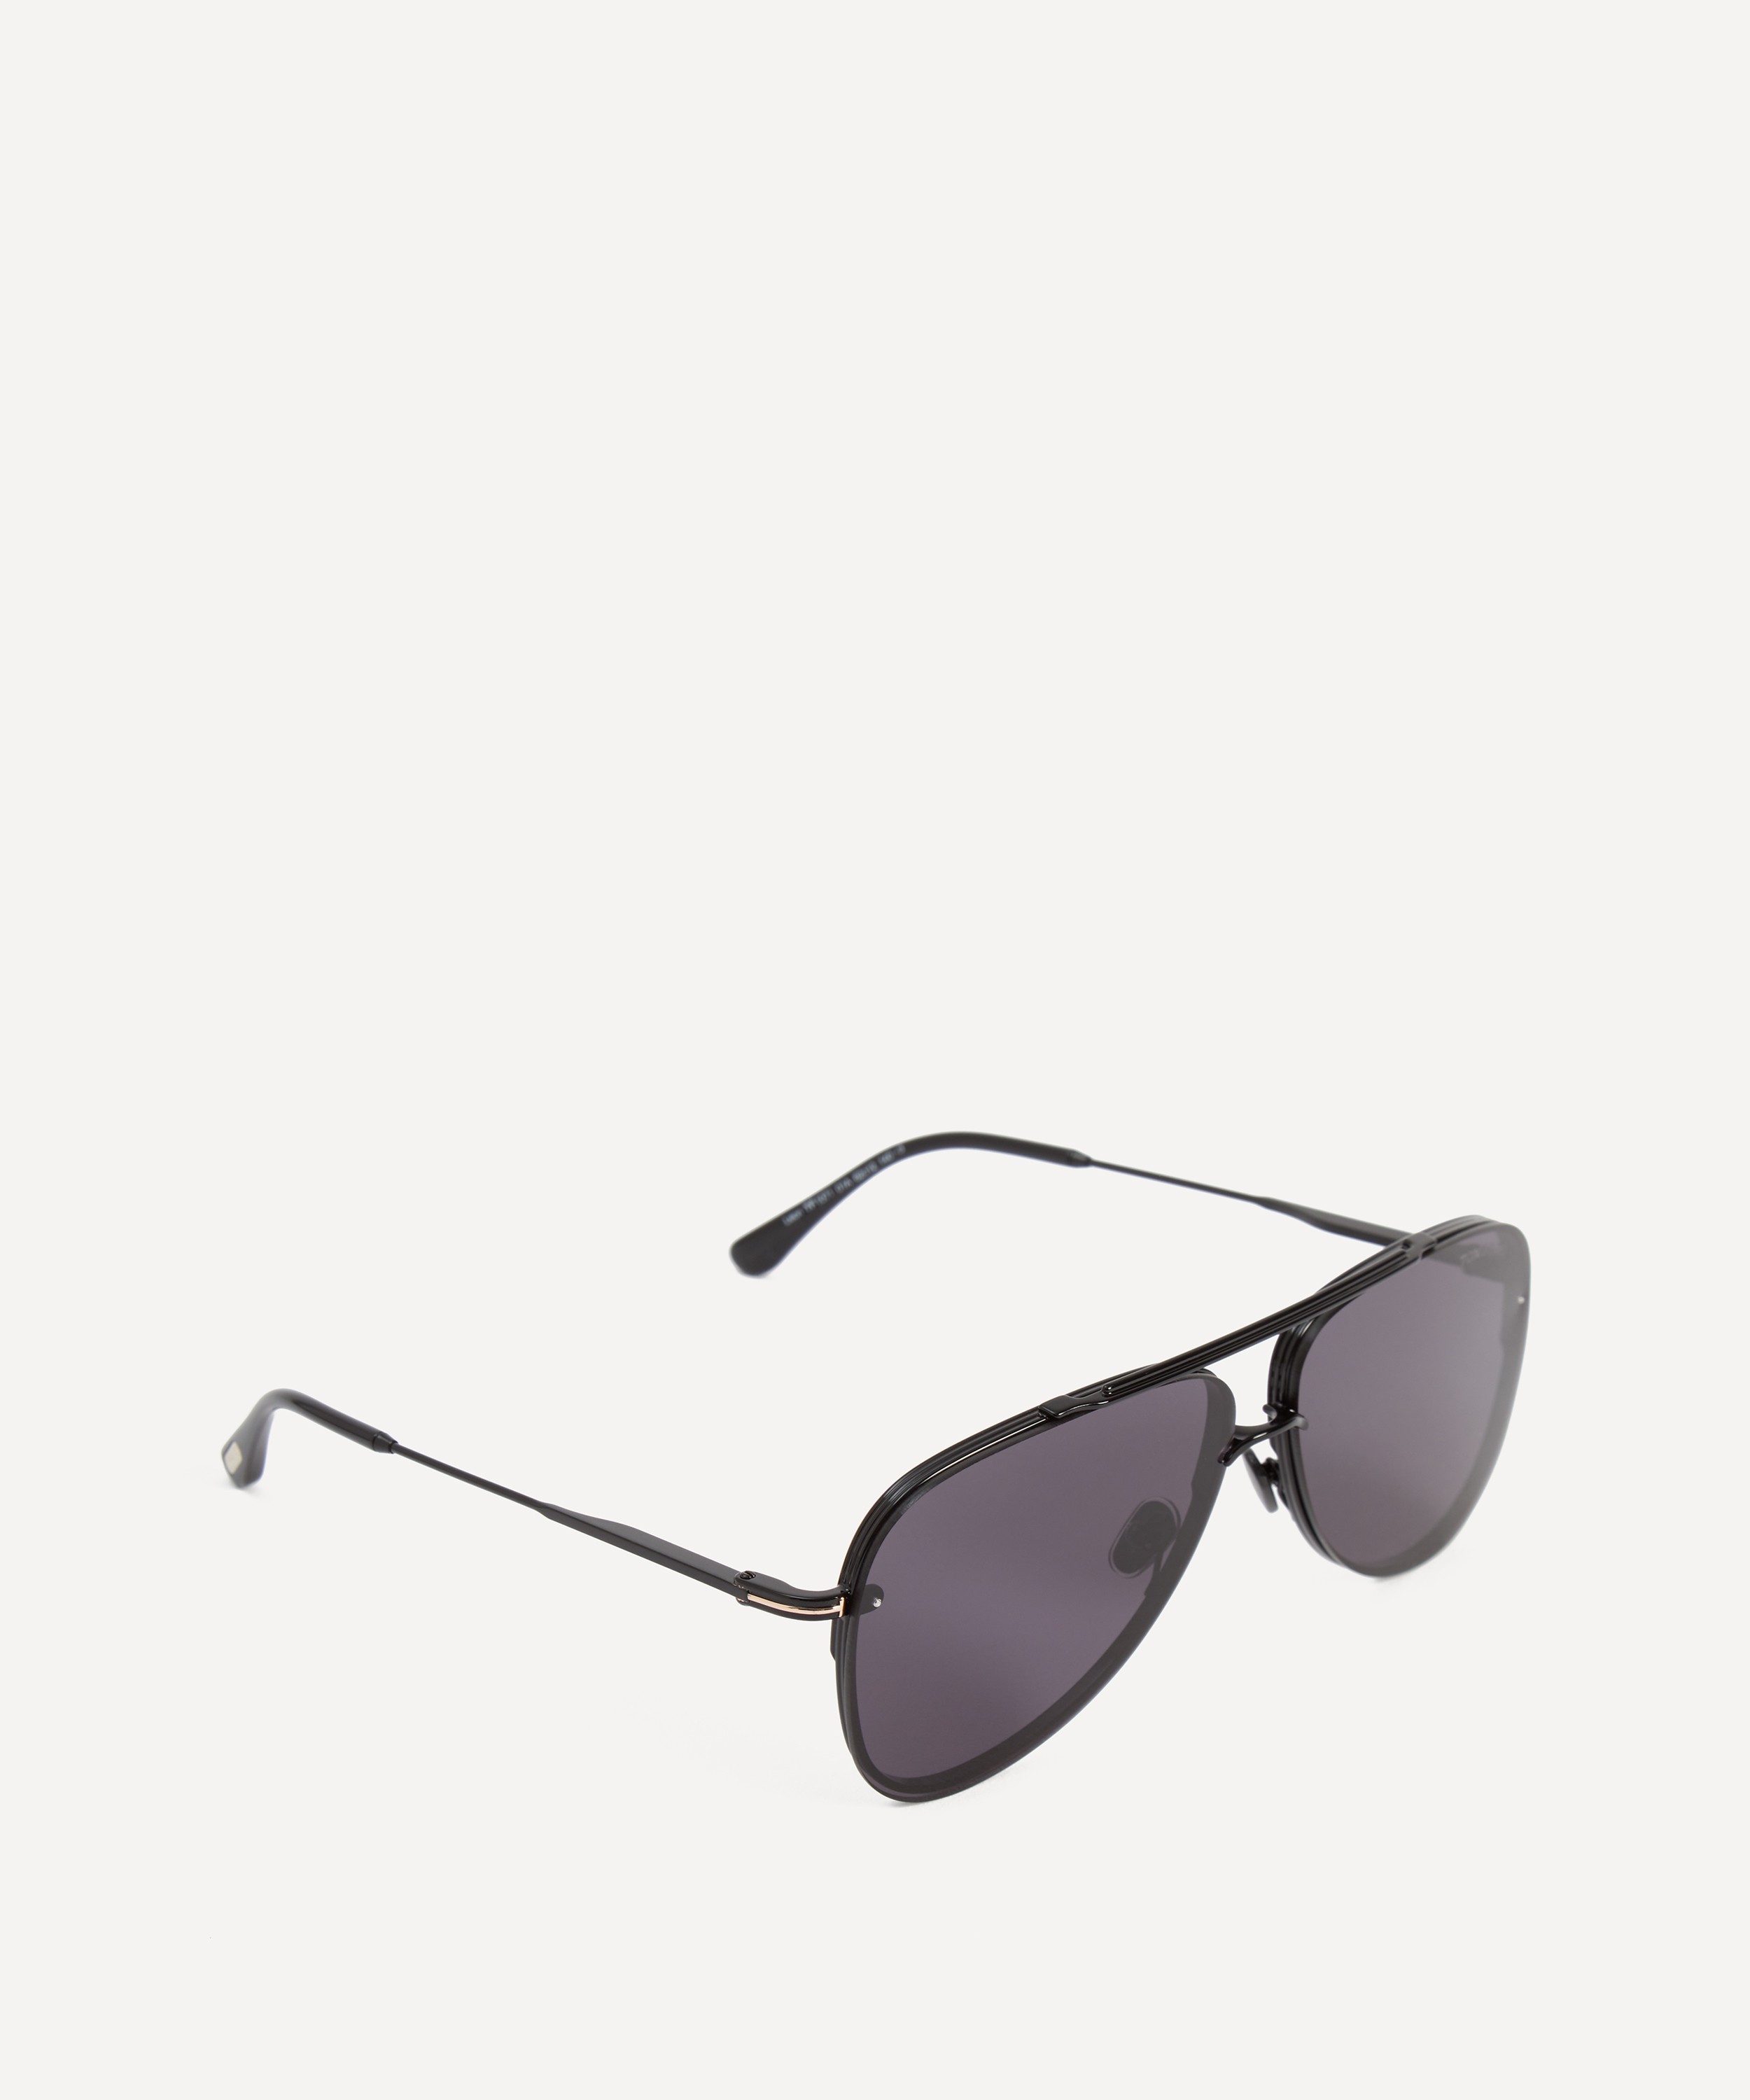 Tom Ford - Aviator Sunglasses image number 1